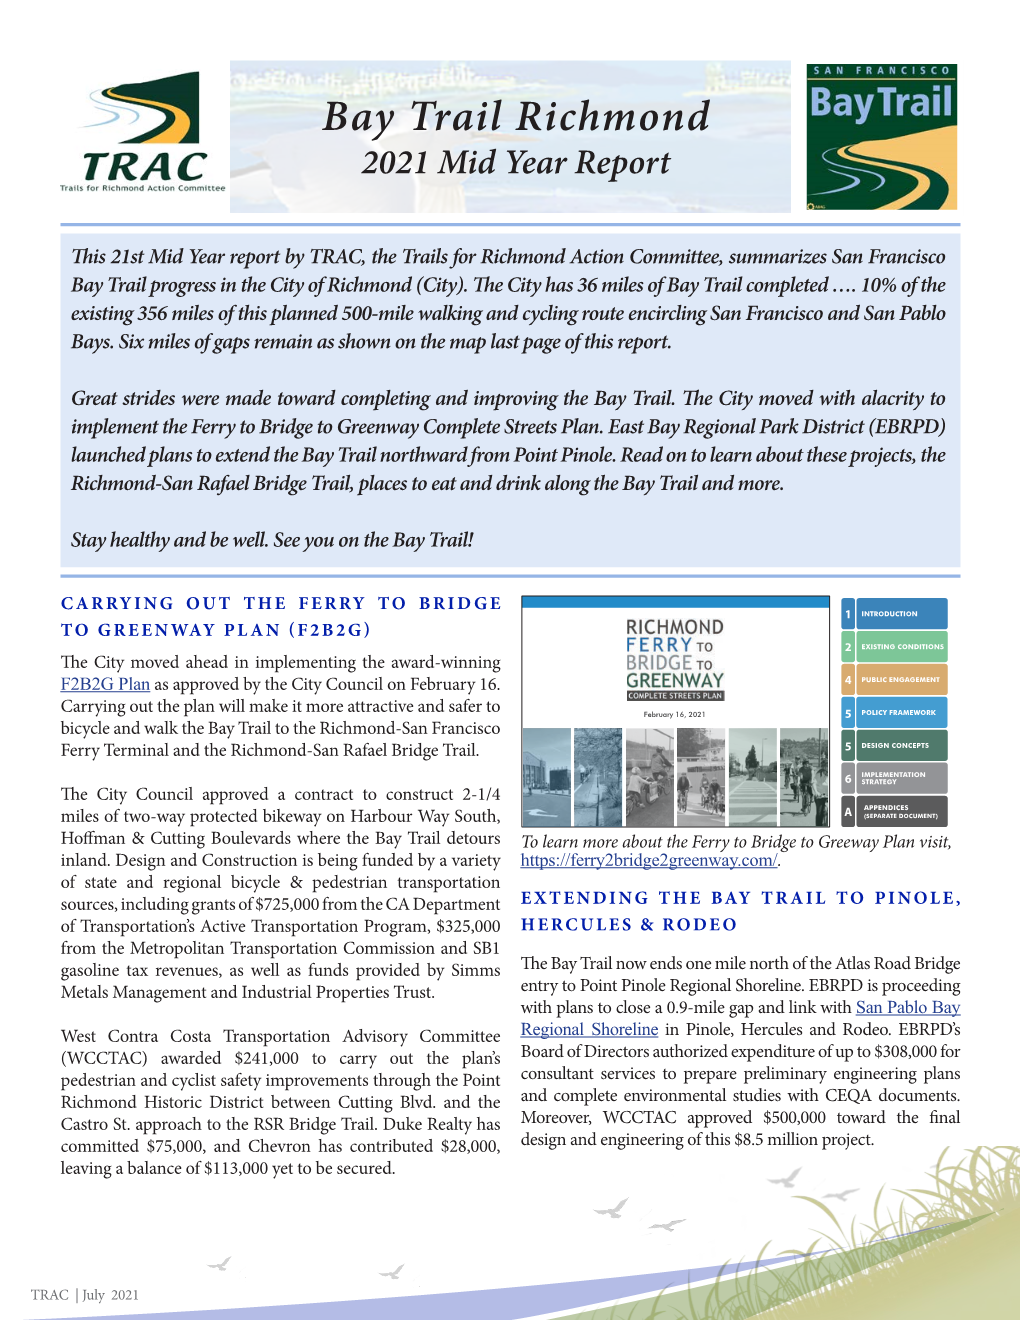 Bay Trail Richmond 2021 Mid Year Report